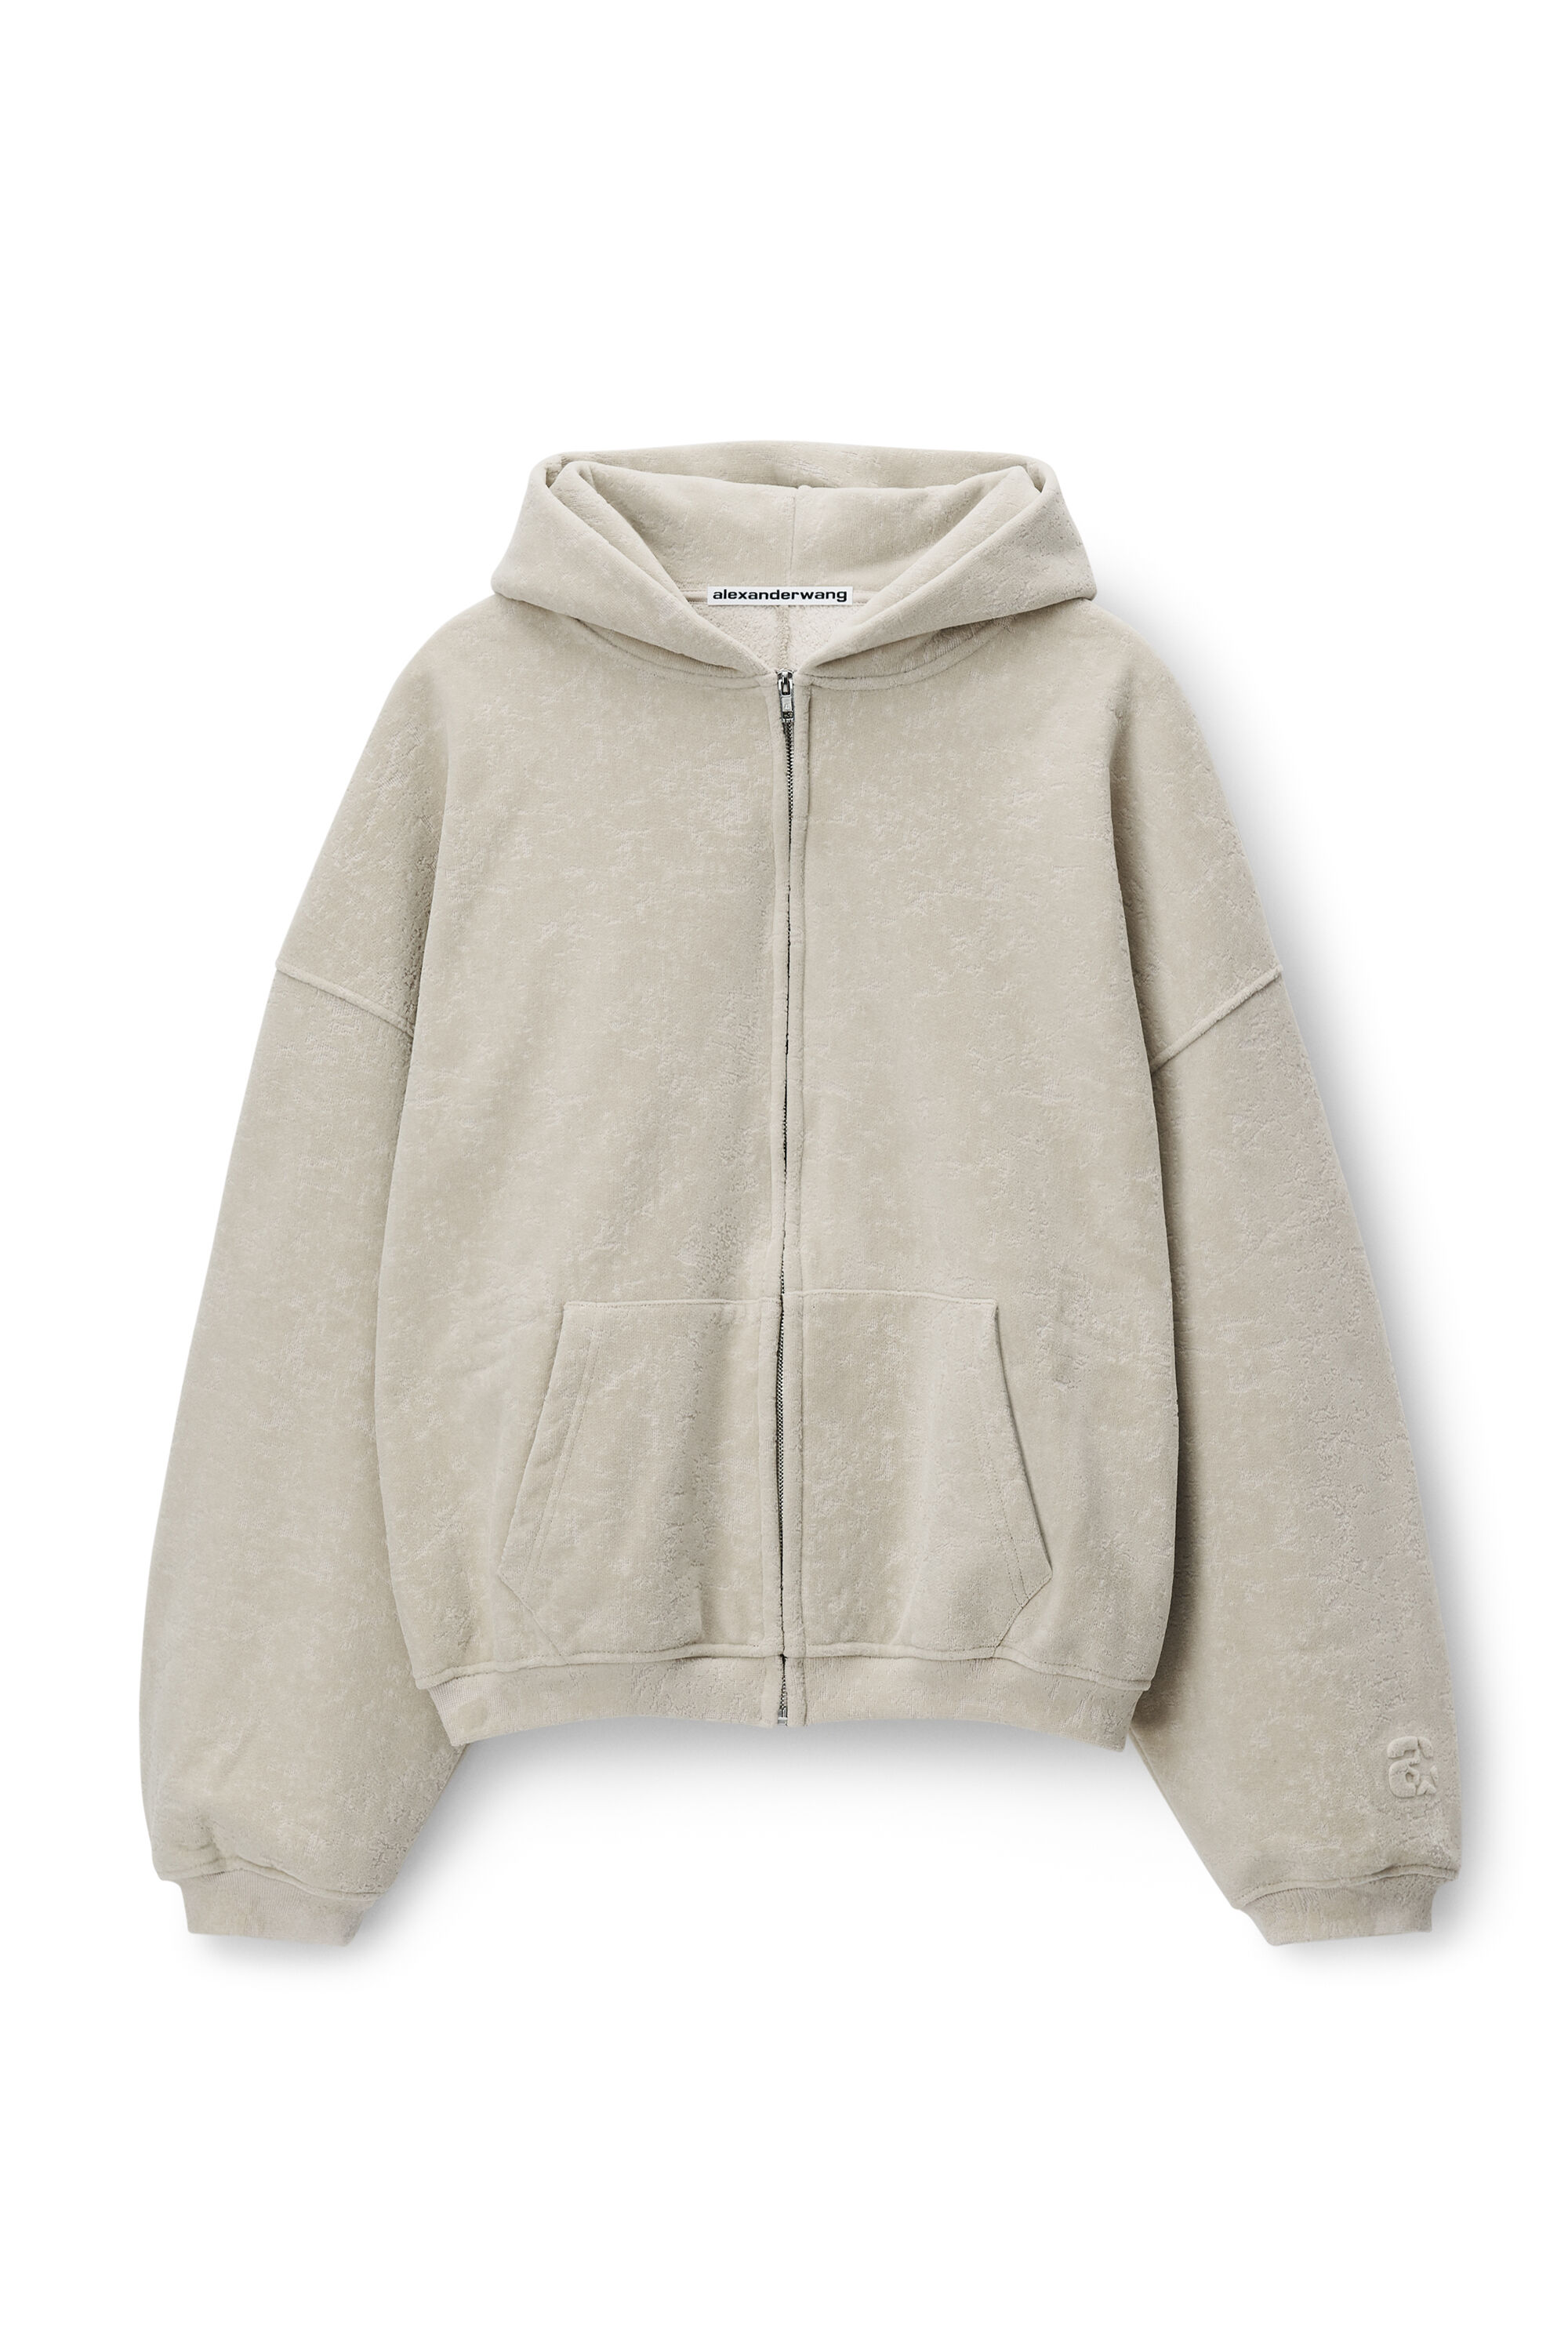 alexanderwang oversized zip up hoodie in flocked terry STORM 